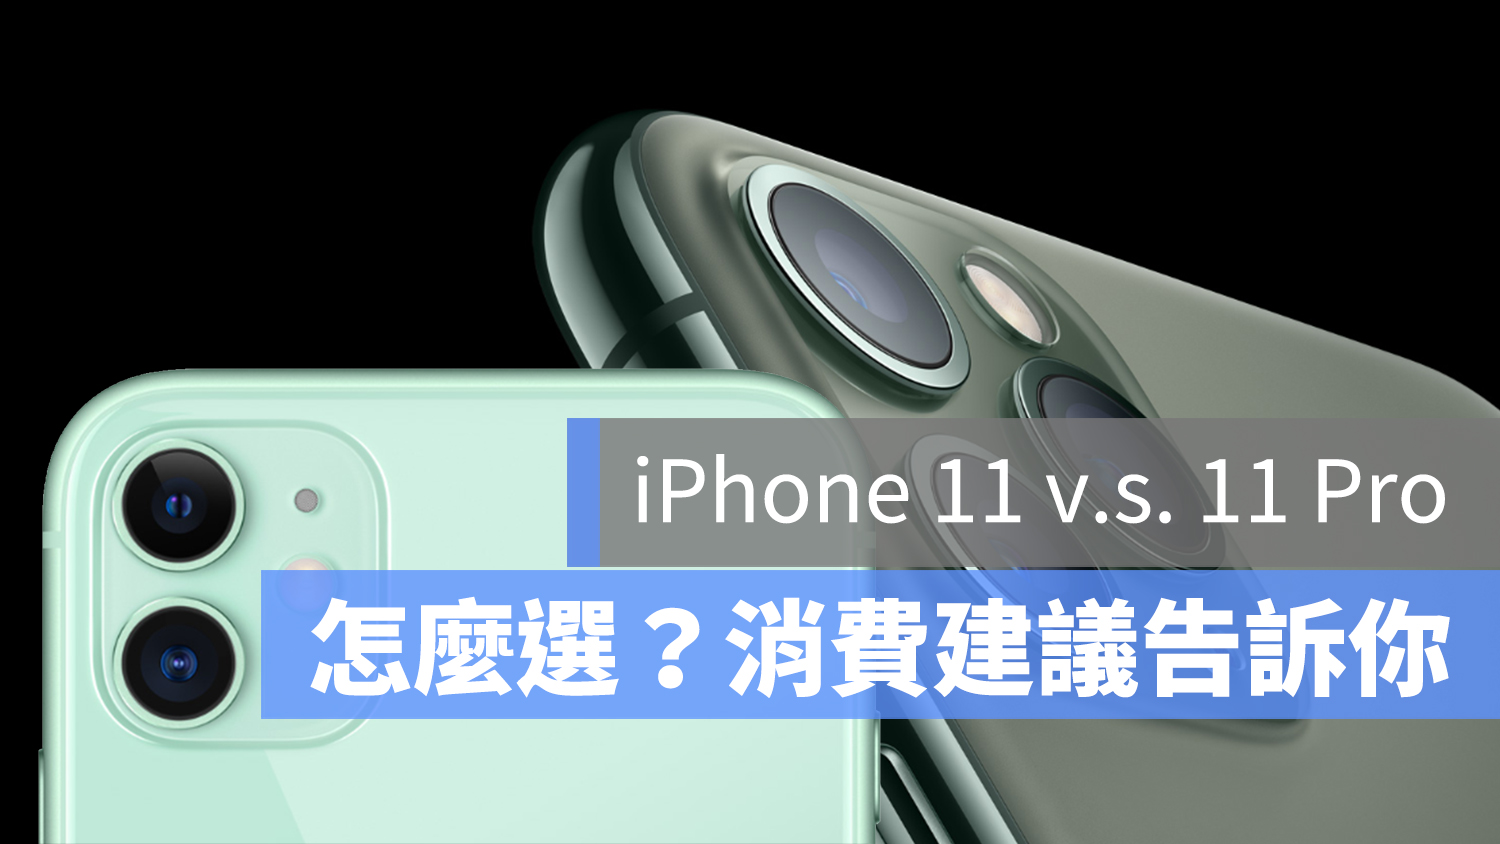 iPhone 11 Pro iPhone 11 分別